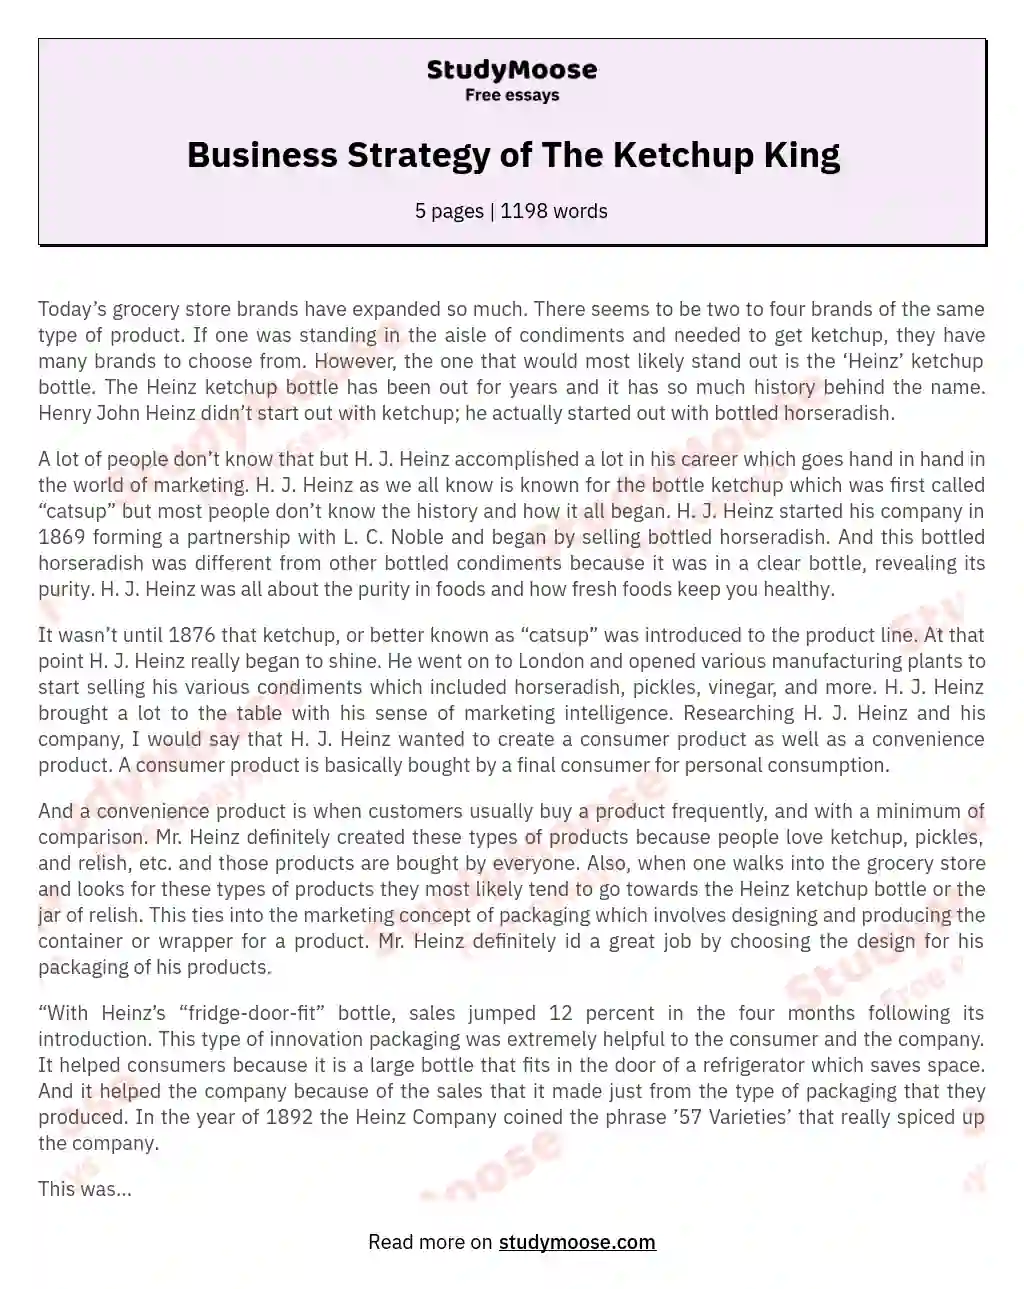 Heinz Ketchup: A Marketing Success Story essay